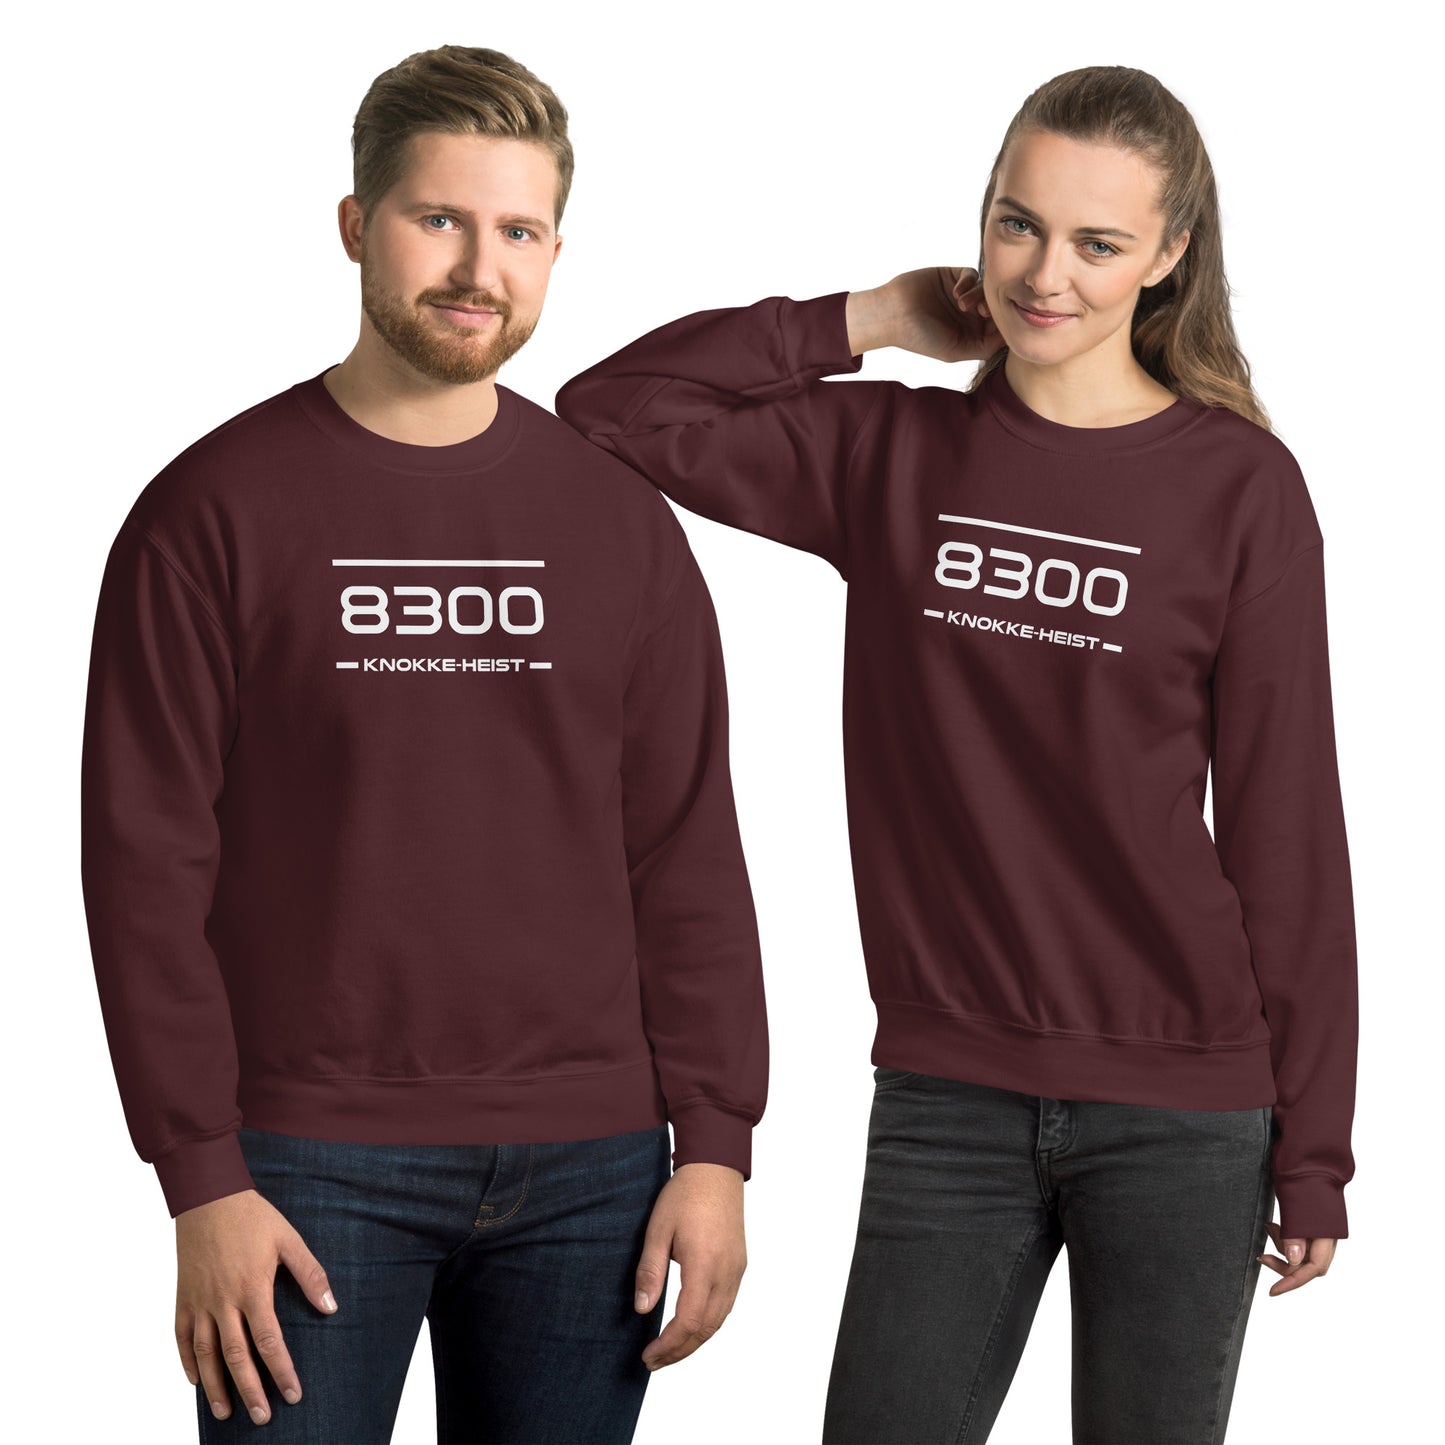 Sweater - 8300 - Knokke-Heist (M/V)